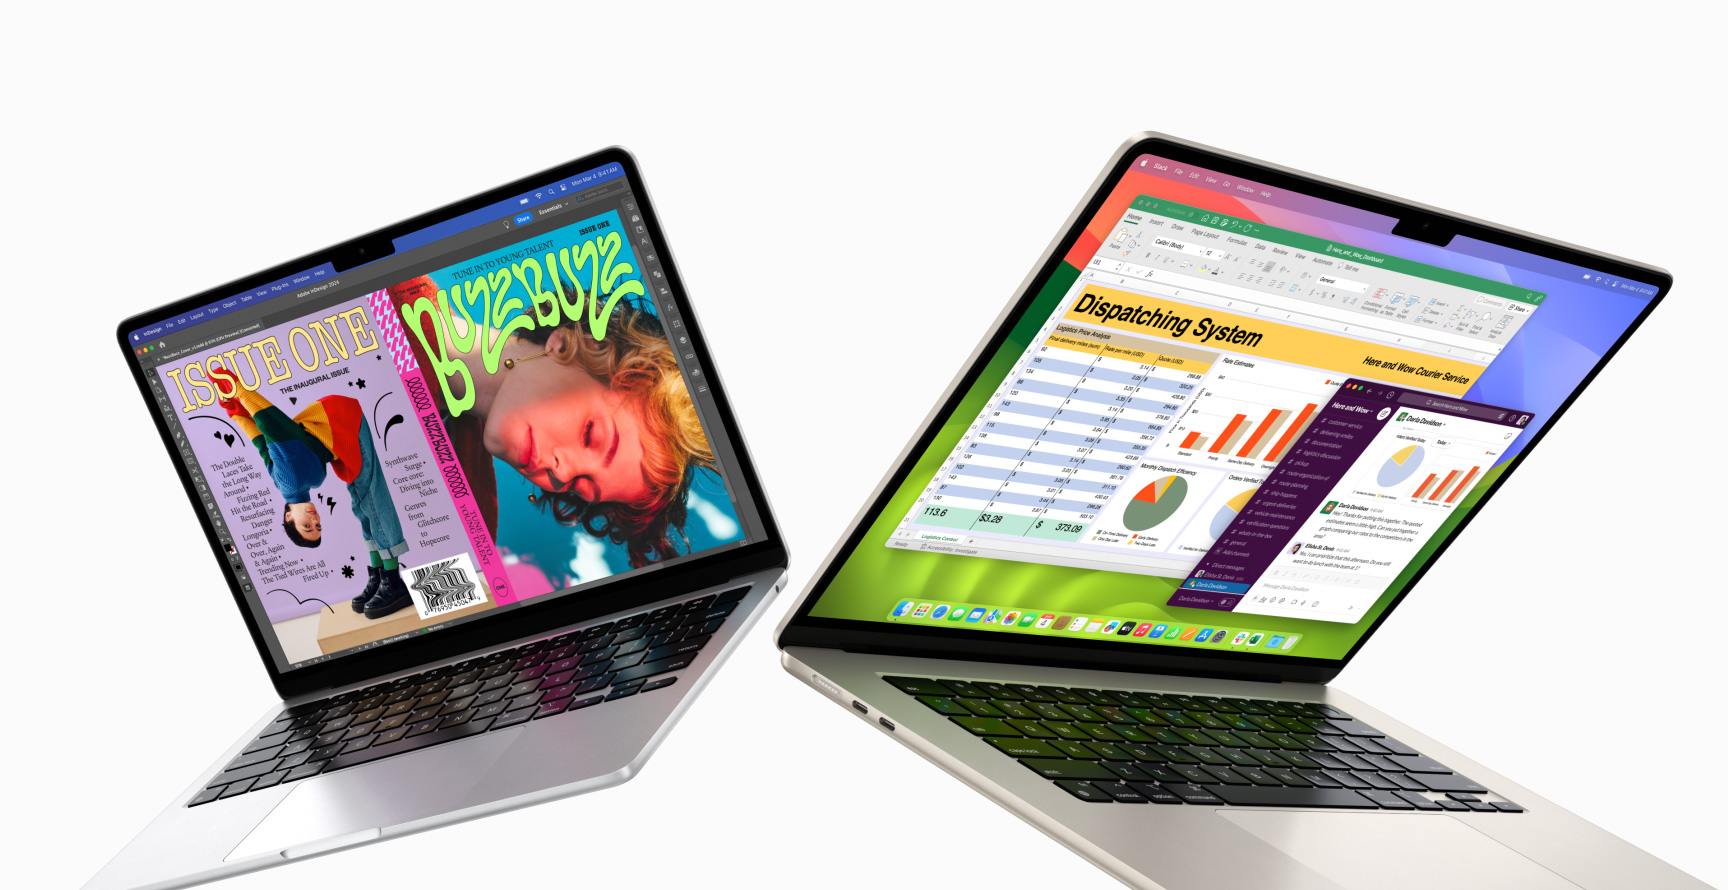 MacBook Air รุ่น 13 นิ้ว ที่เปิดแง้มอยู่ทางด้านซ้ายและ MacBook Air รุ่น 15 นิ้ว อยู่ทางด้านขวา หน้าจอของรุ่น 13 นิ้ว แสดงปกนิตยสารสีสันสวยงามที่สร้างด้วย InDesign หน้าจอของรุ่น 15 นิ้ว แสดง Microsoft Excel และ Slack